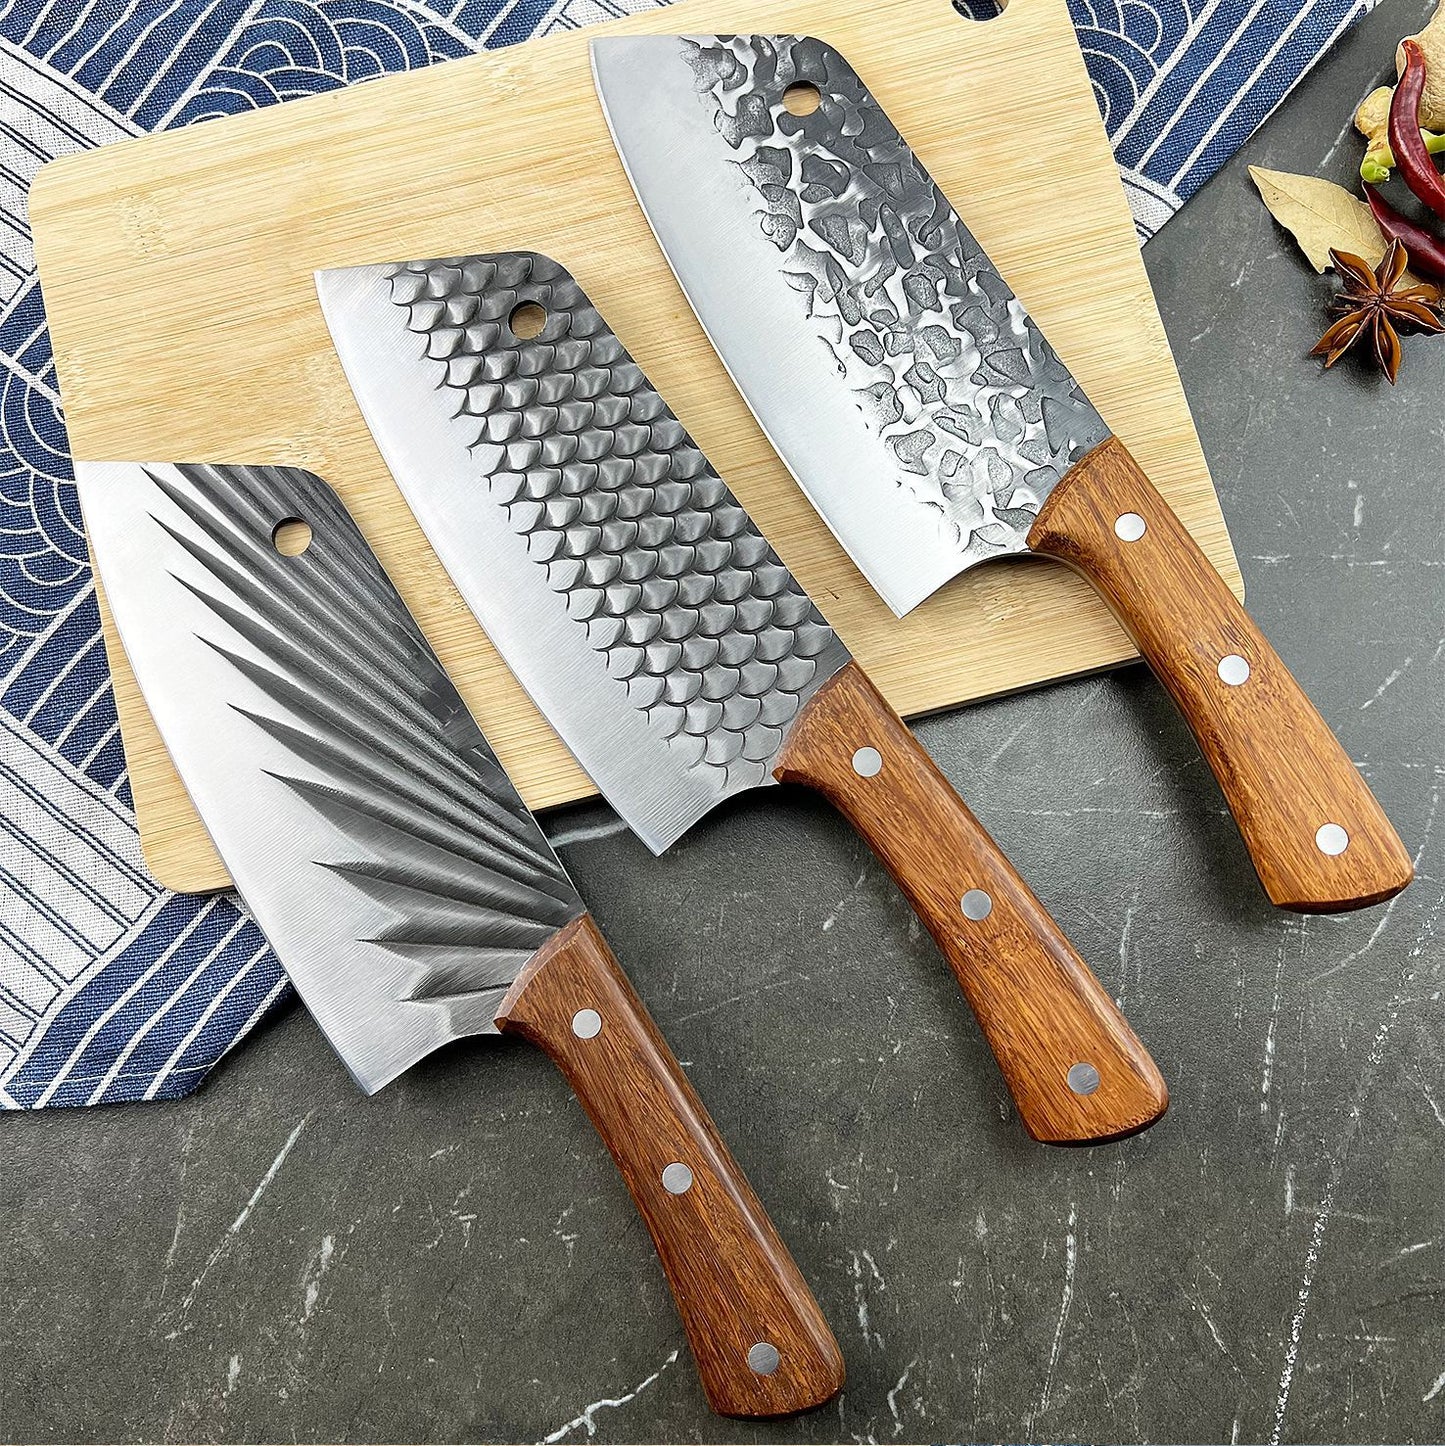 KD Nan Bamboo Stainless Steel Kitchen Knife Set